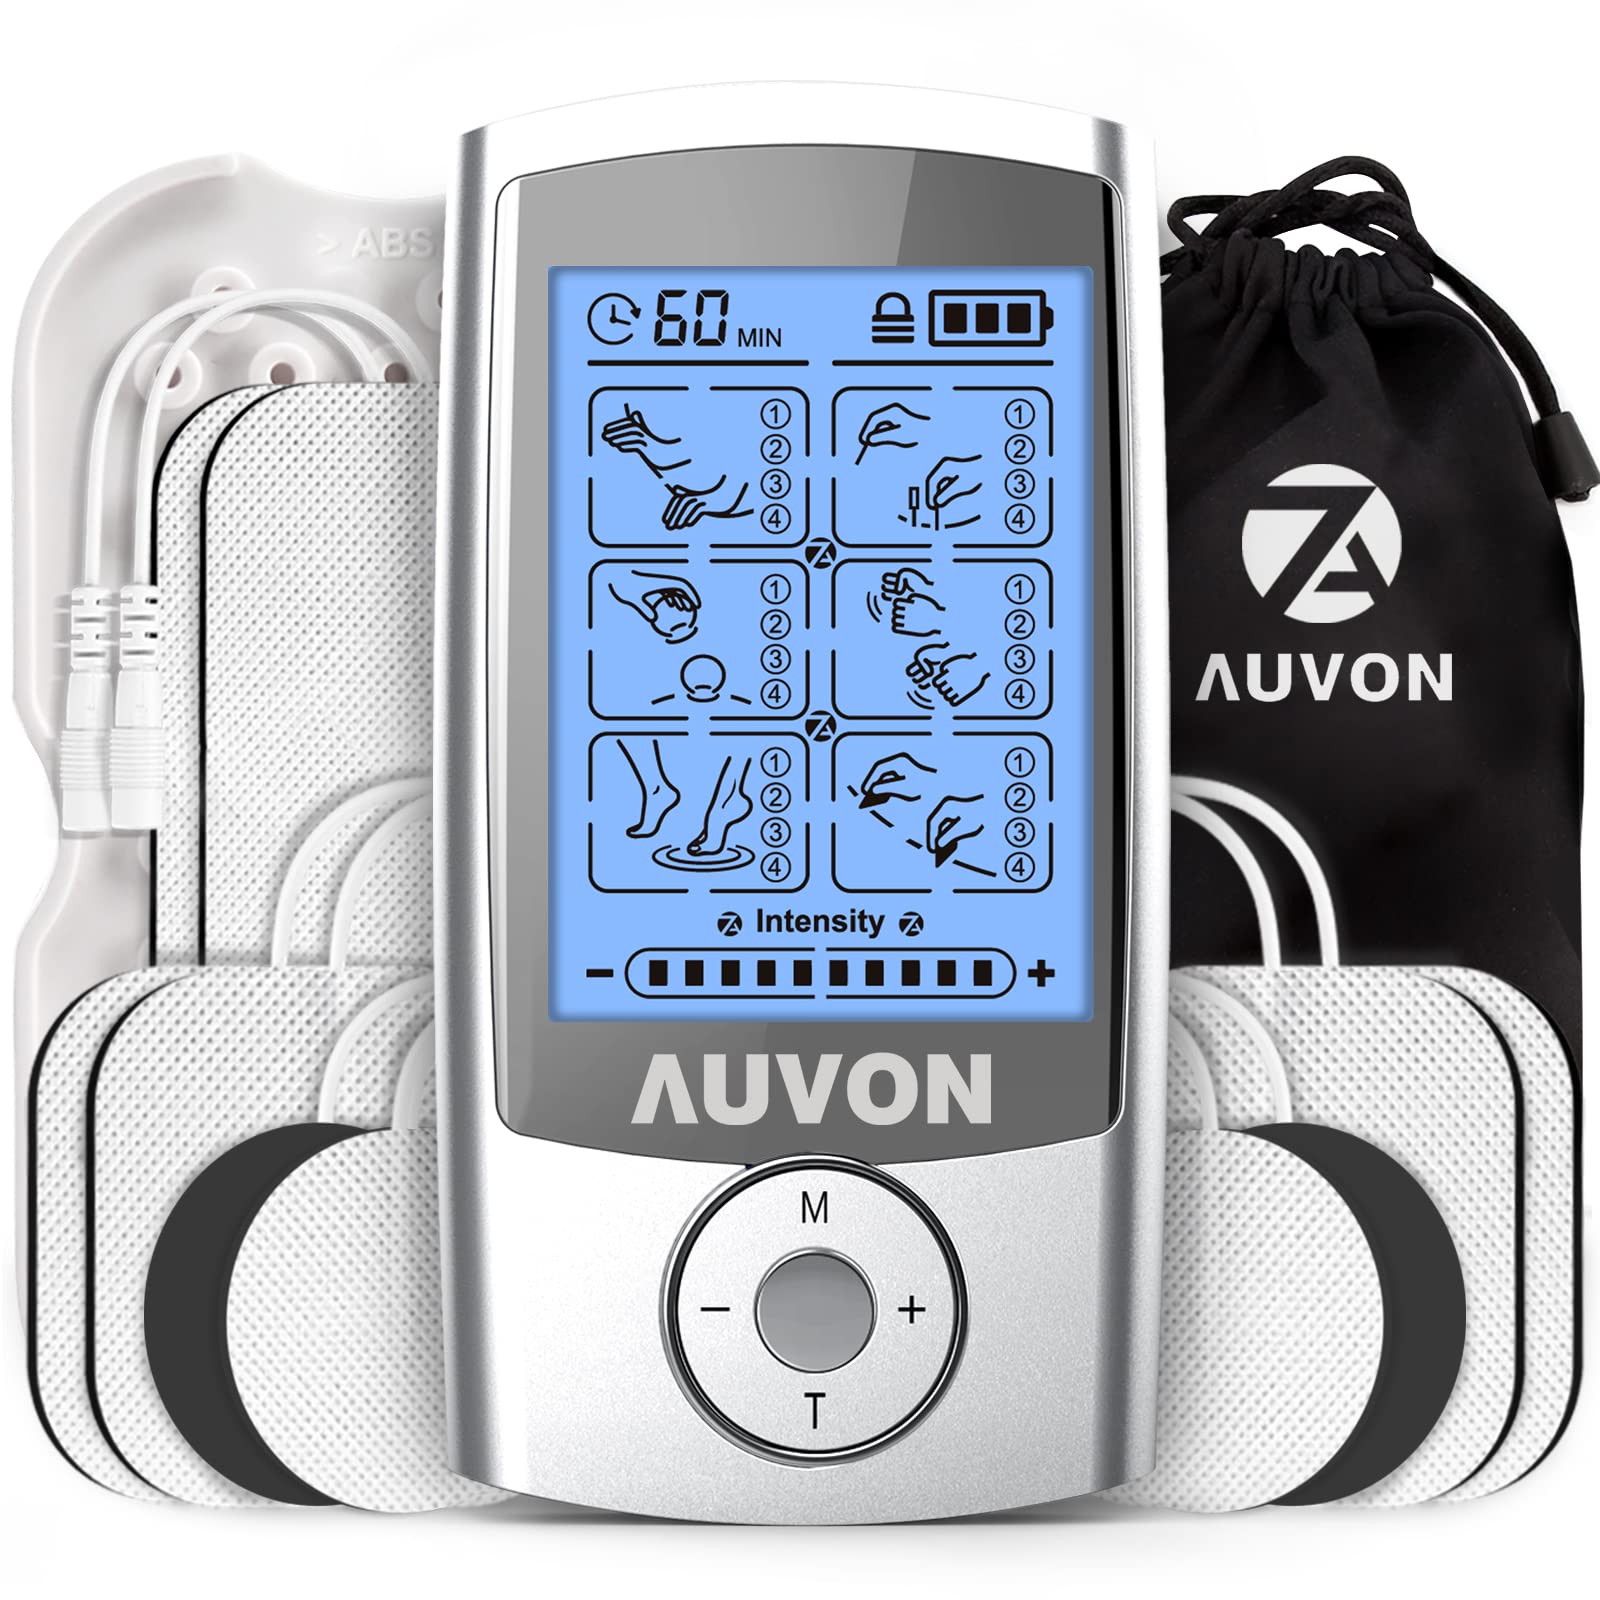 AUVON 4 Outputs TENS Unit EMS Muscle Stimulator Machine review